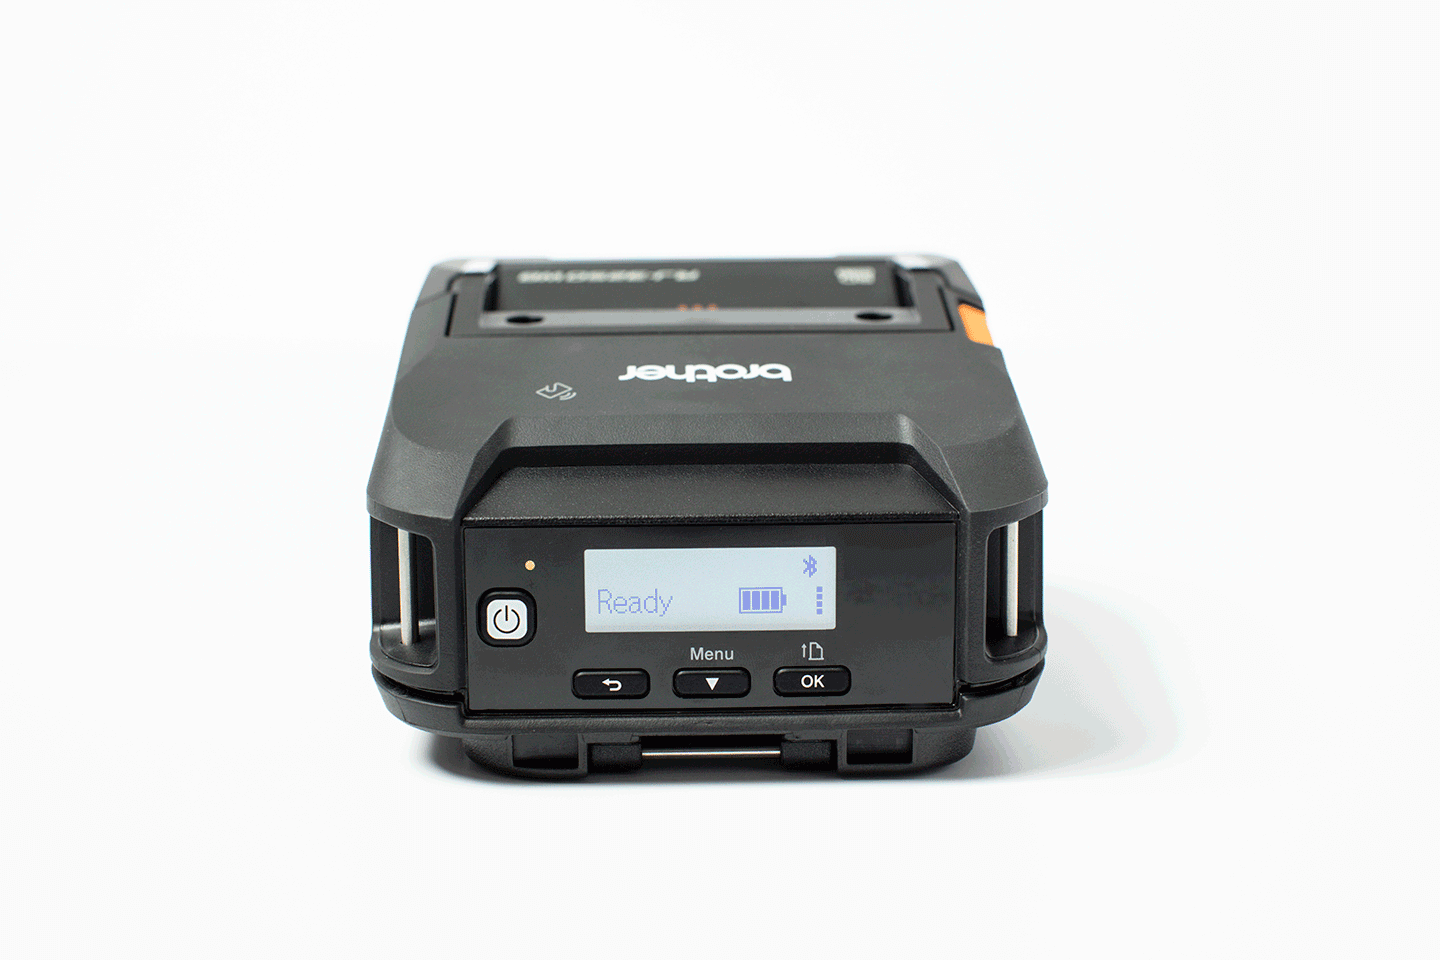 RJ-3250WBL, Stampante portatile